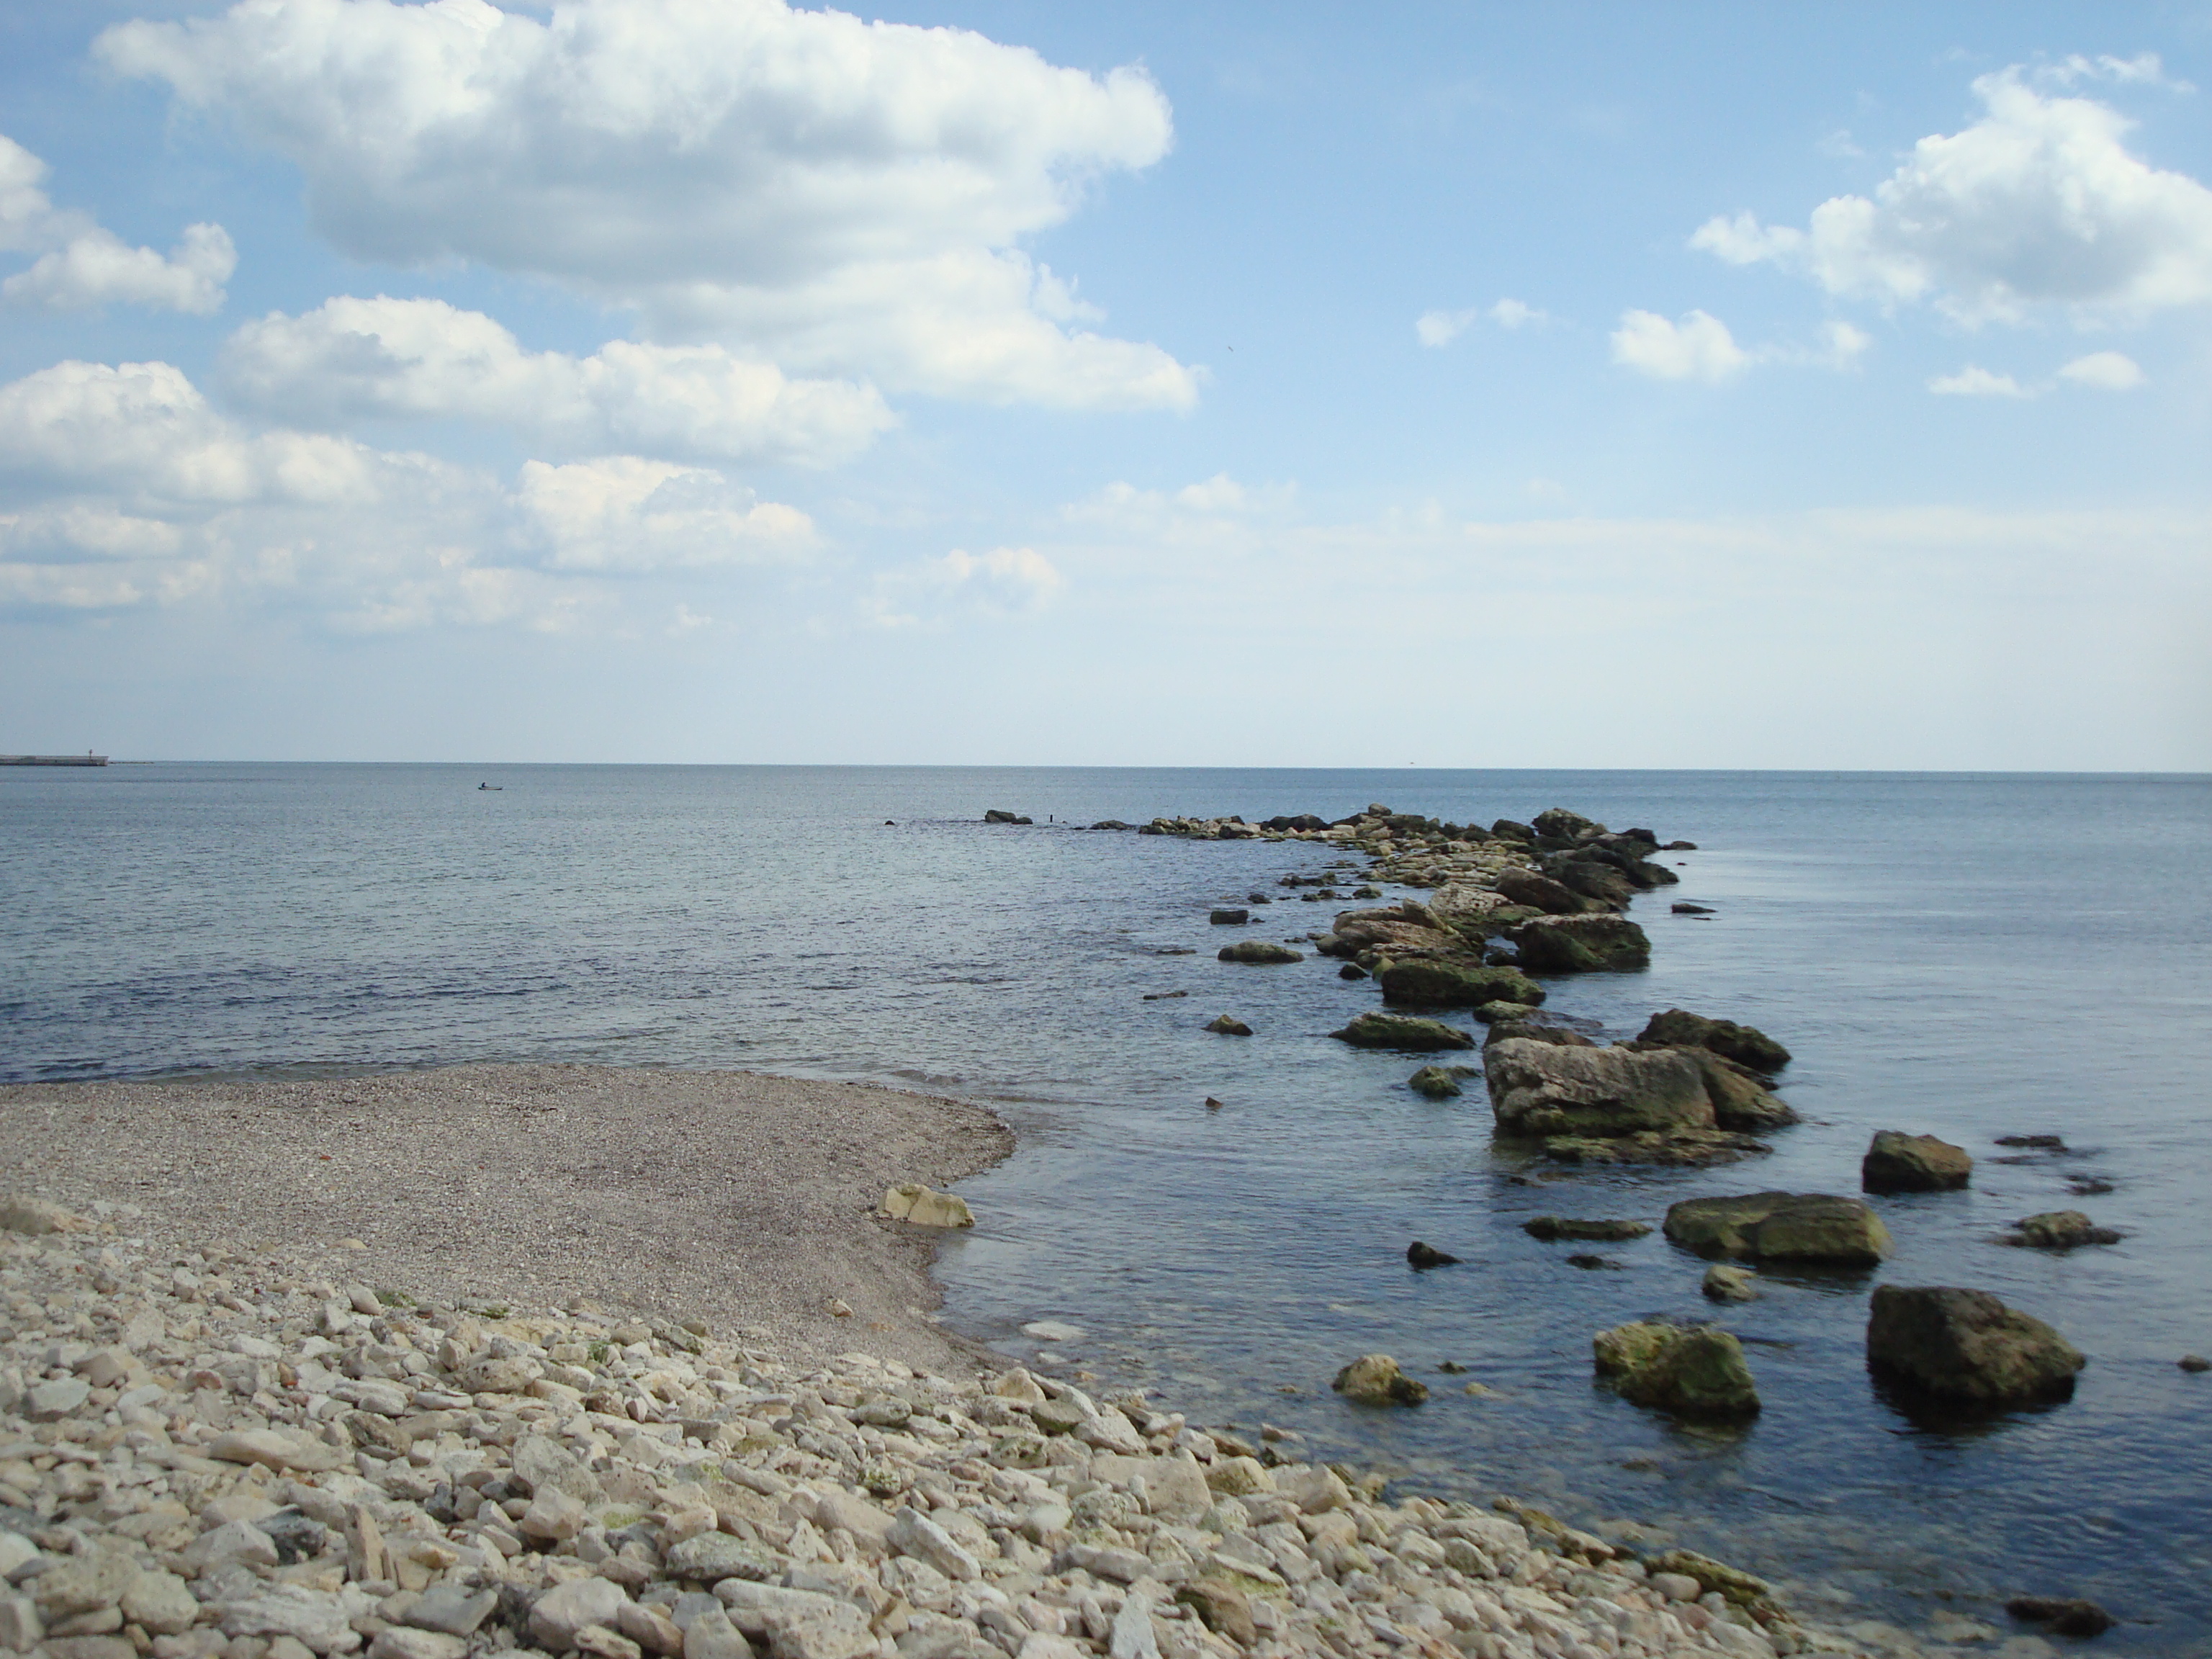 Rocks in the sea photo